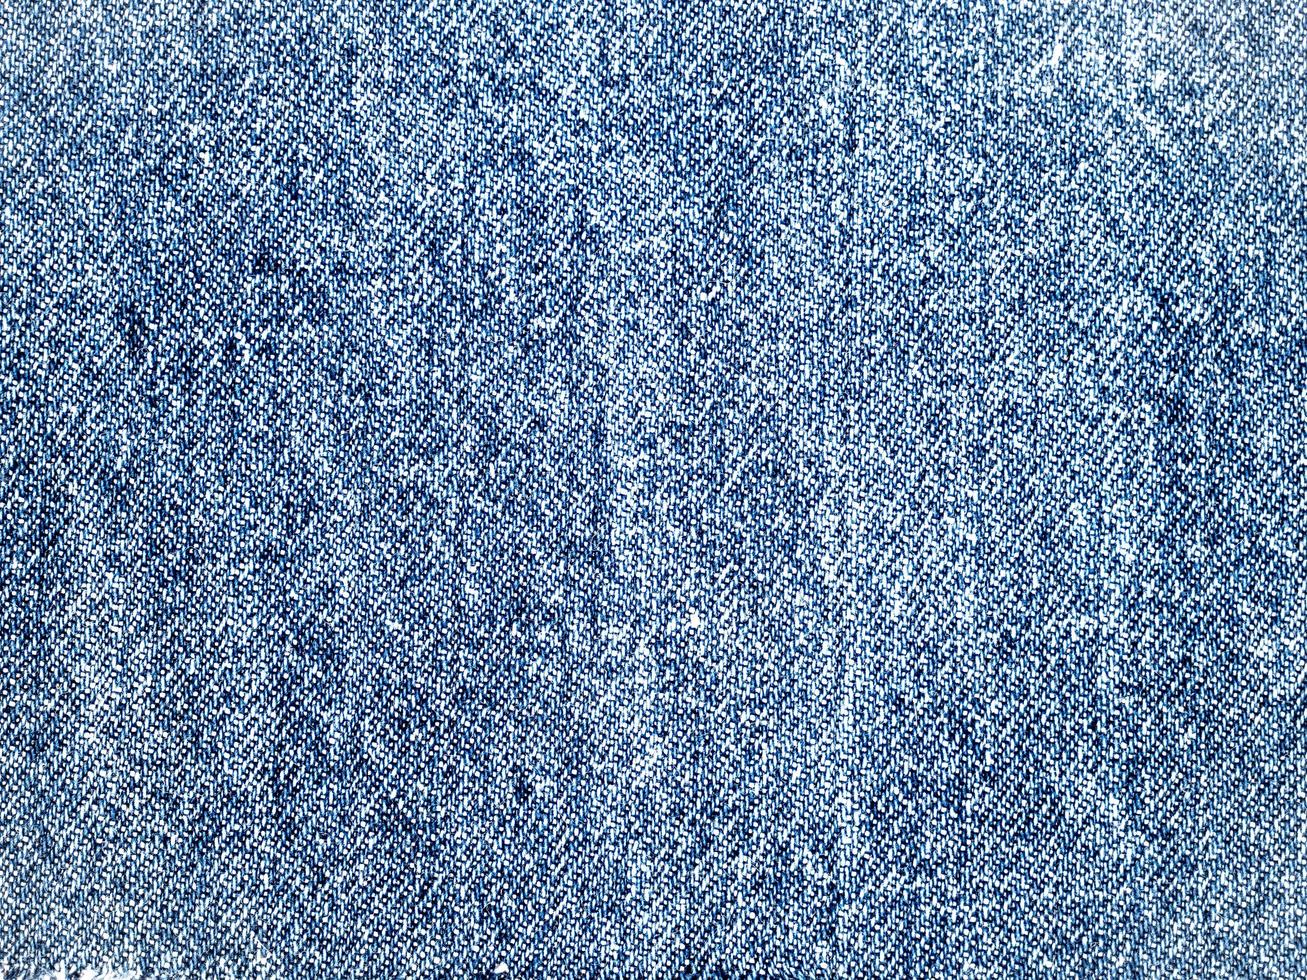 superfície jeans azul claro foto